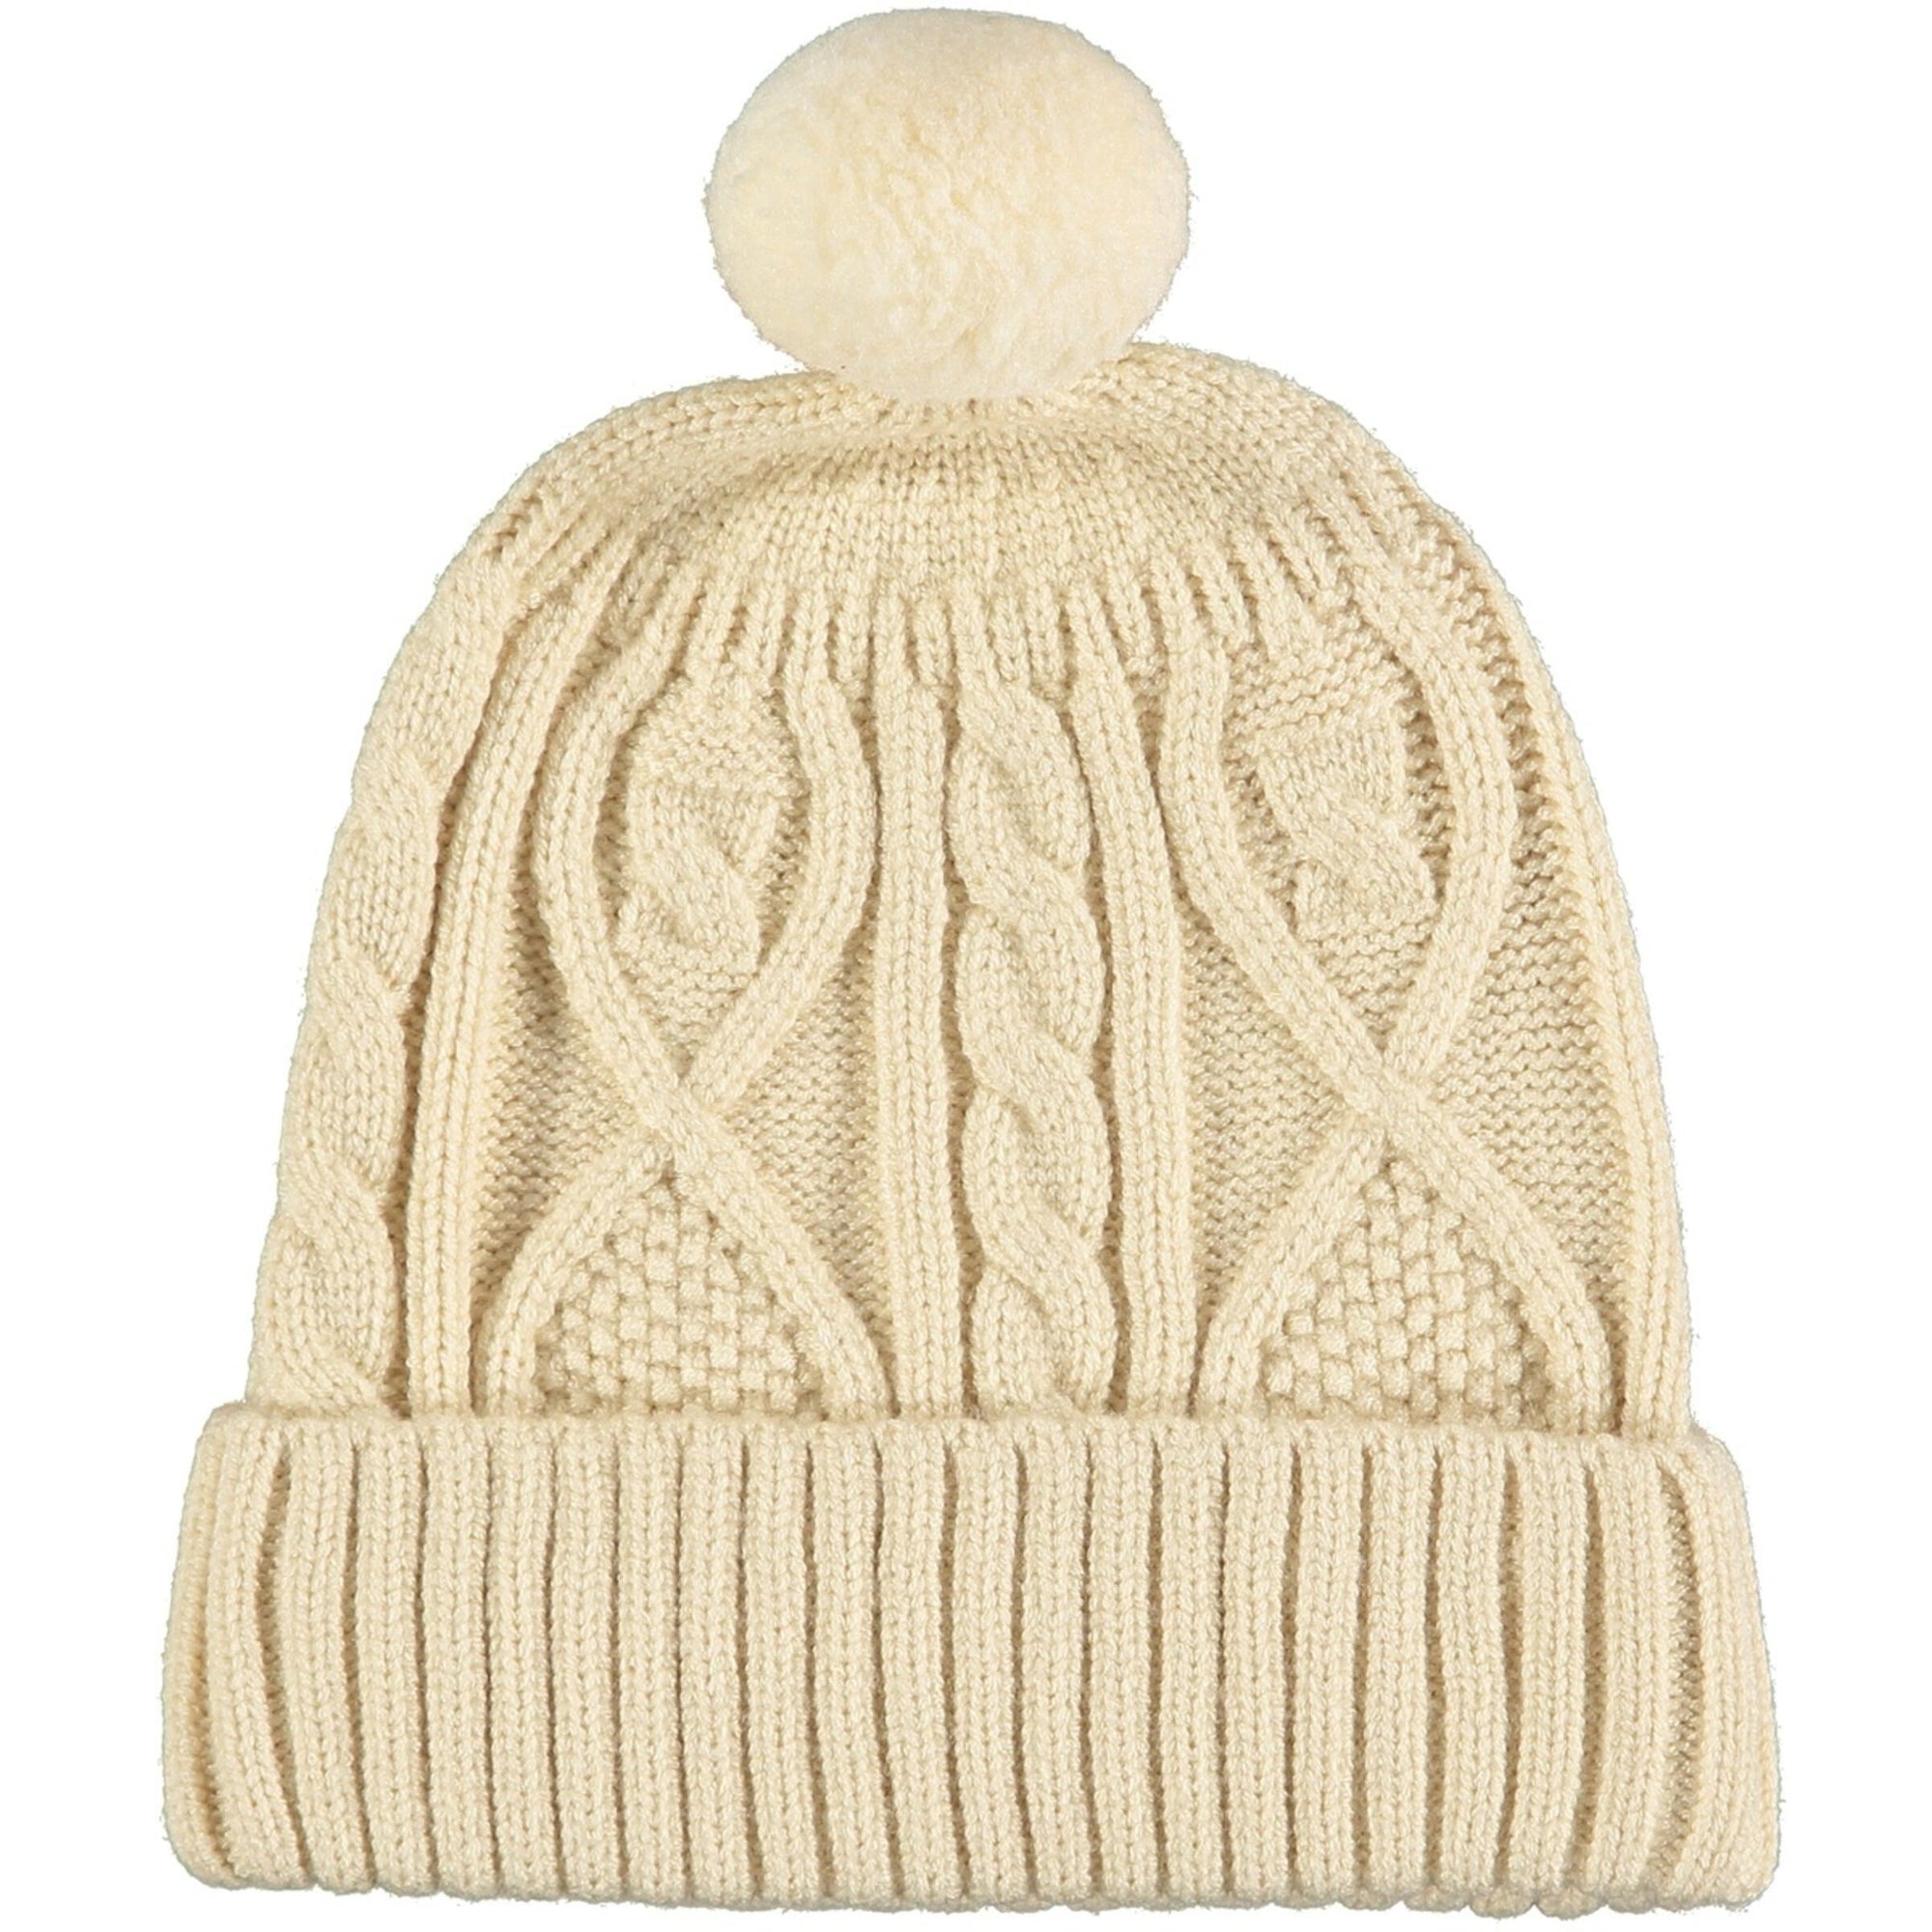 Vignette Maddy Knit Hat / Cream